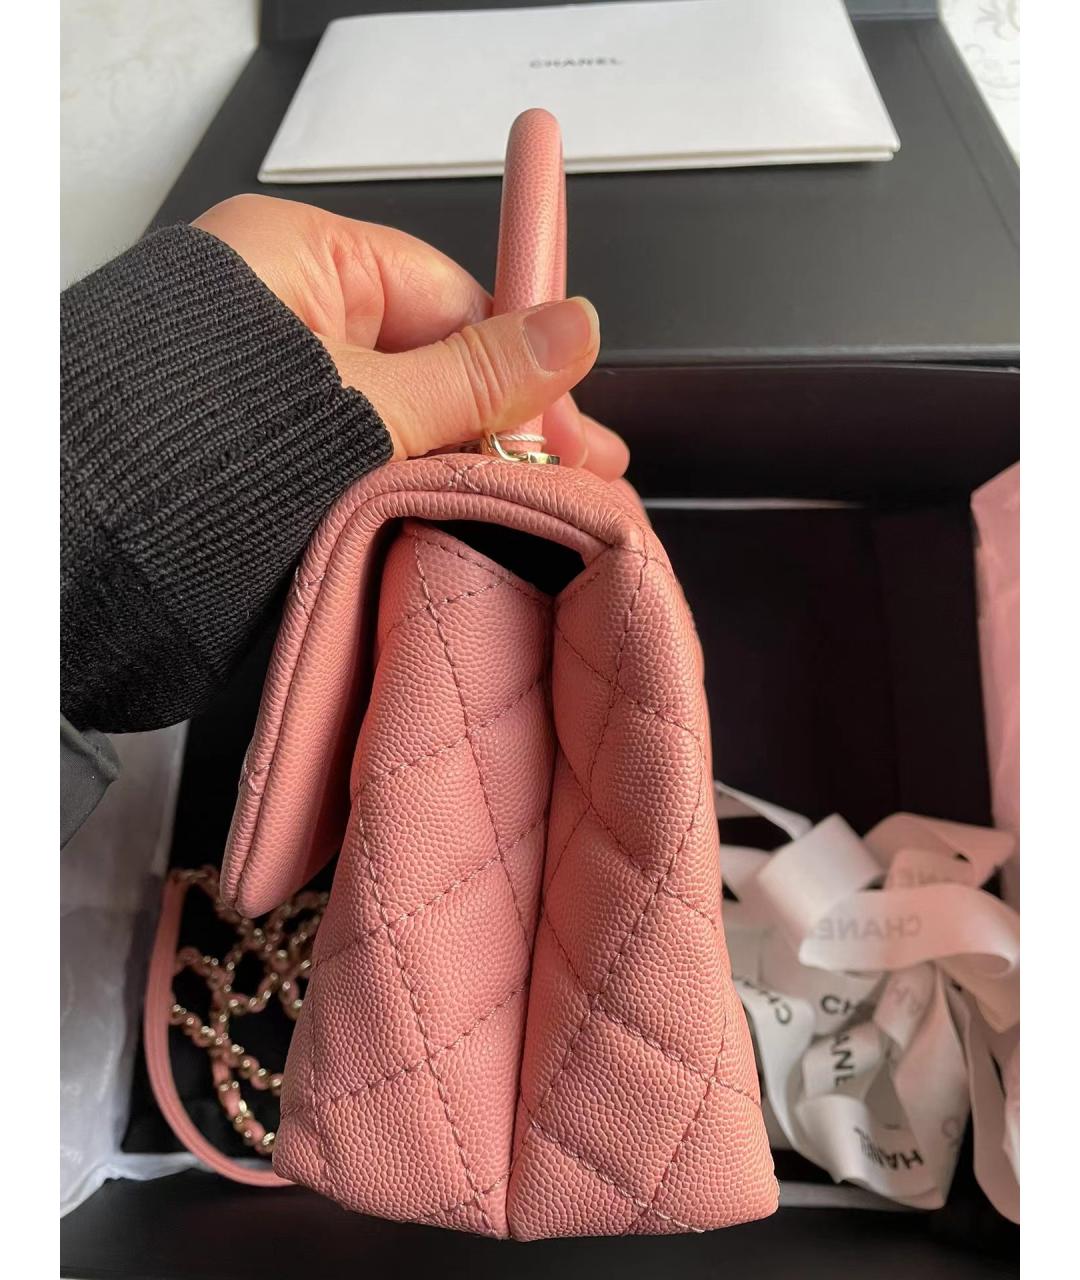 CHANEL PRE-OWNED Розовая сумка через плечо, фото 2